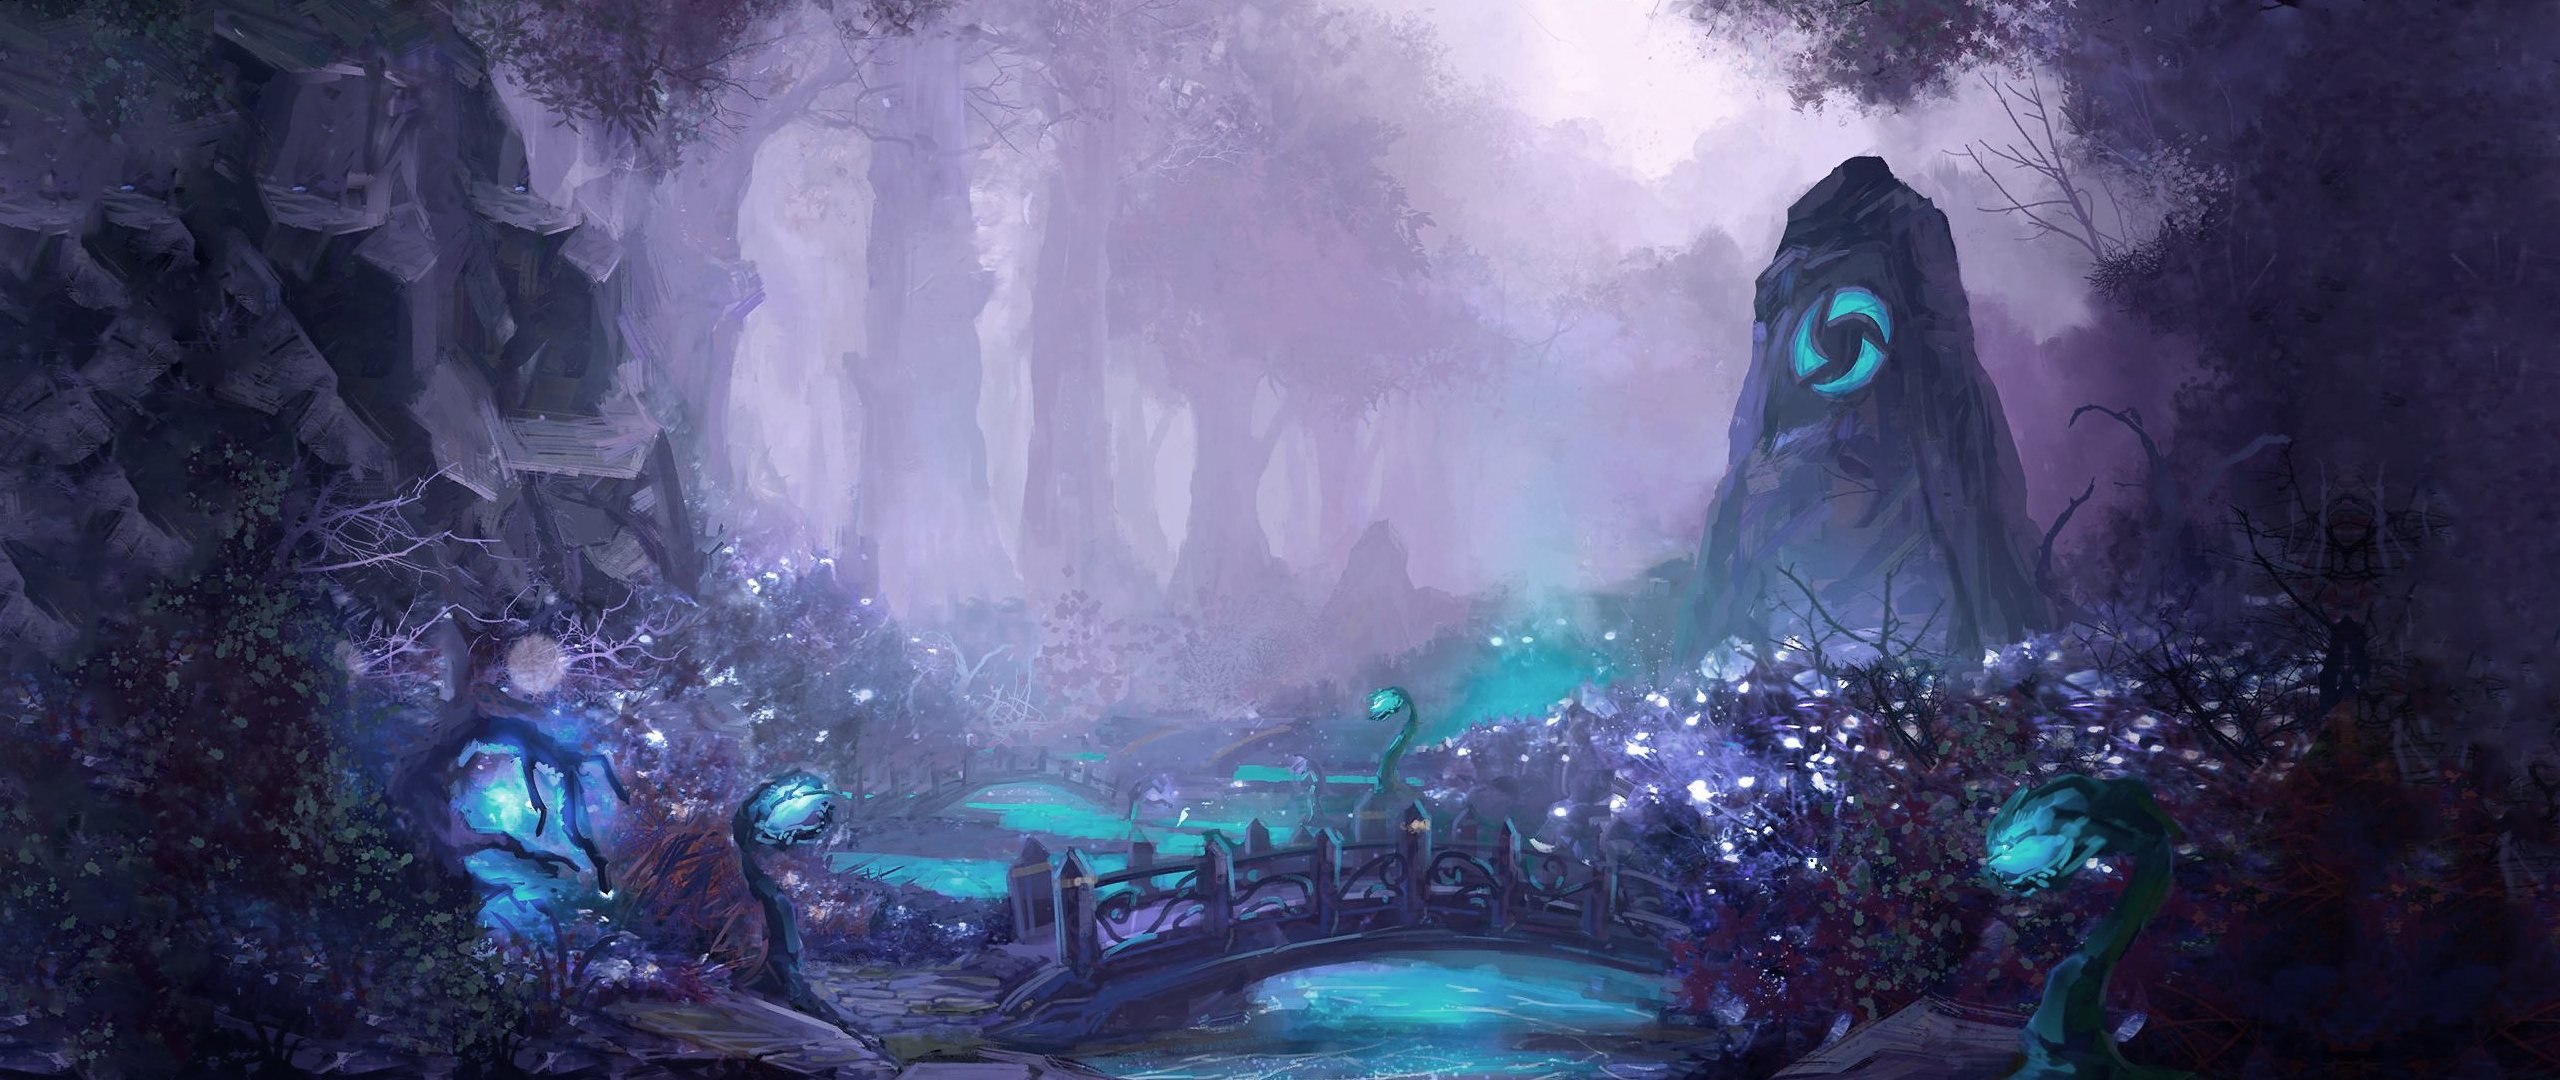 Nexus Heroes Of The Storm Thorns River Bridge Mist Ultrawide Pastel Trees Forest 2560x1080